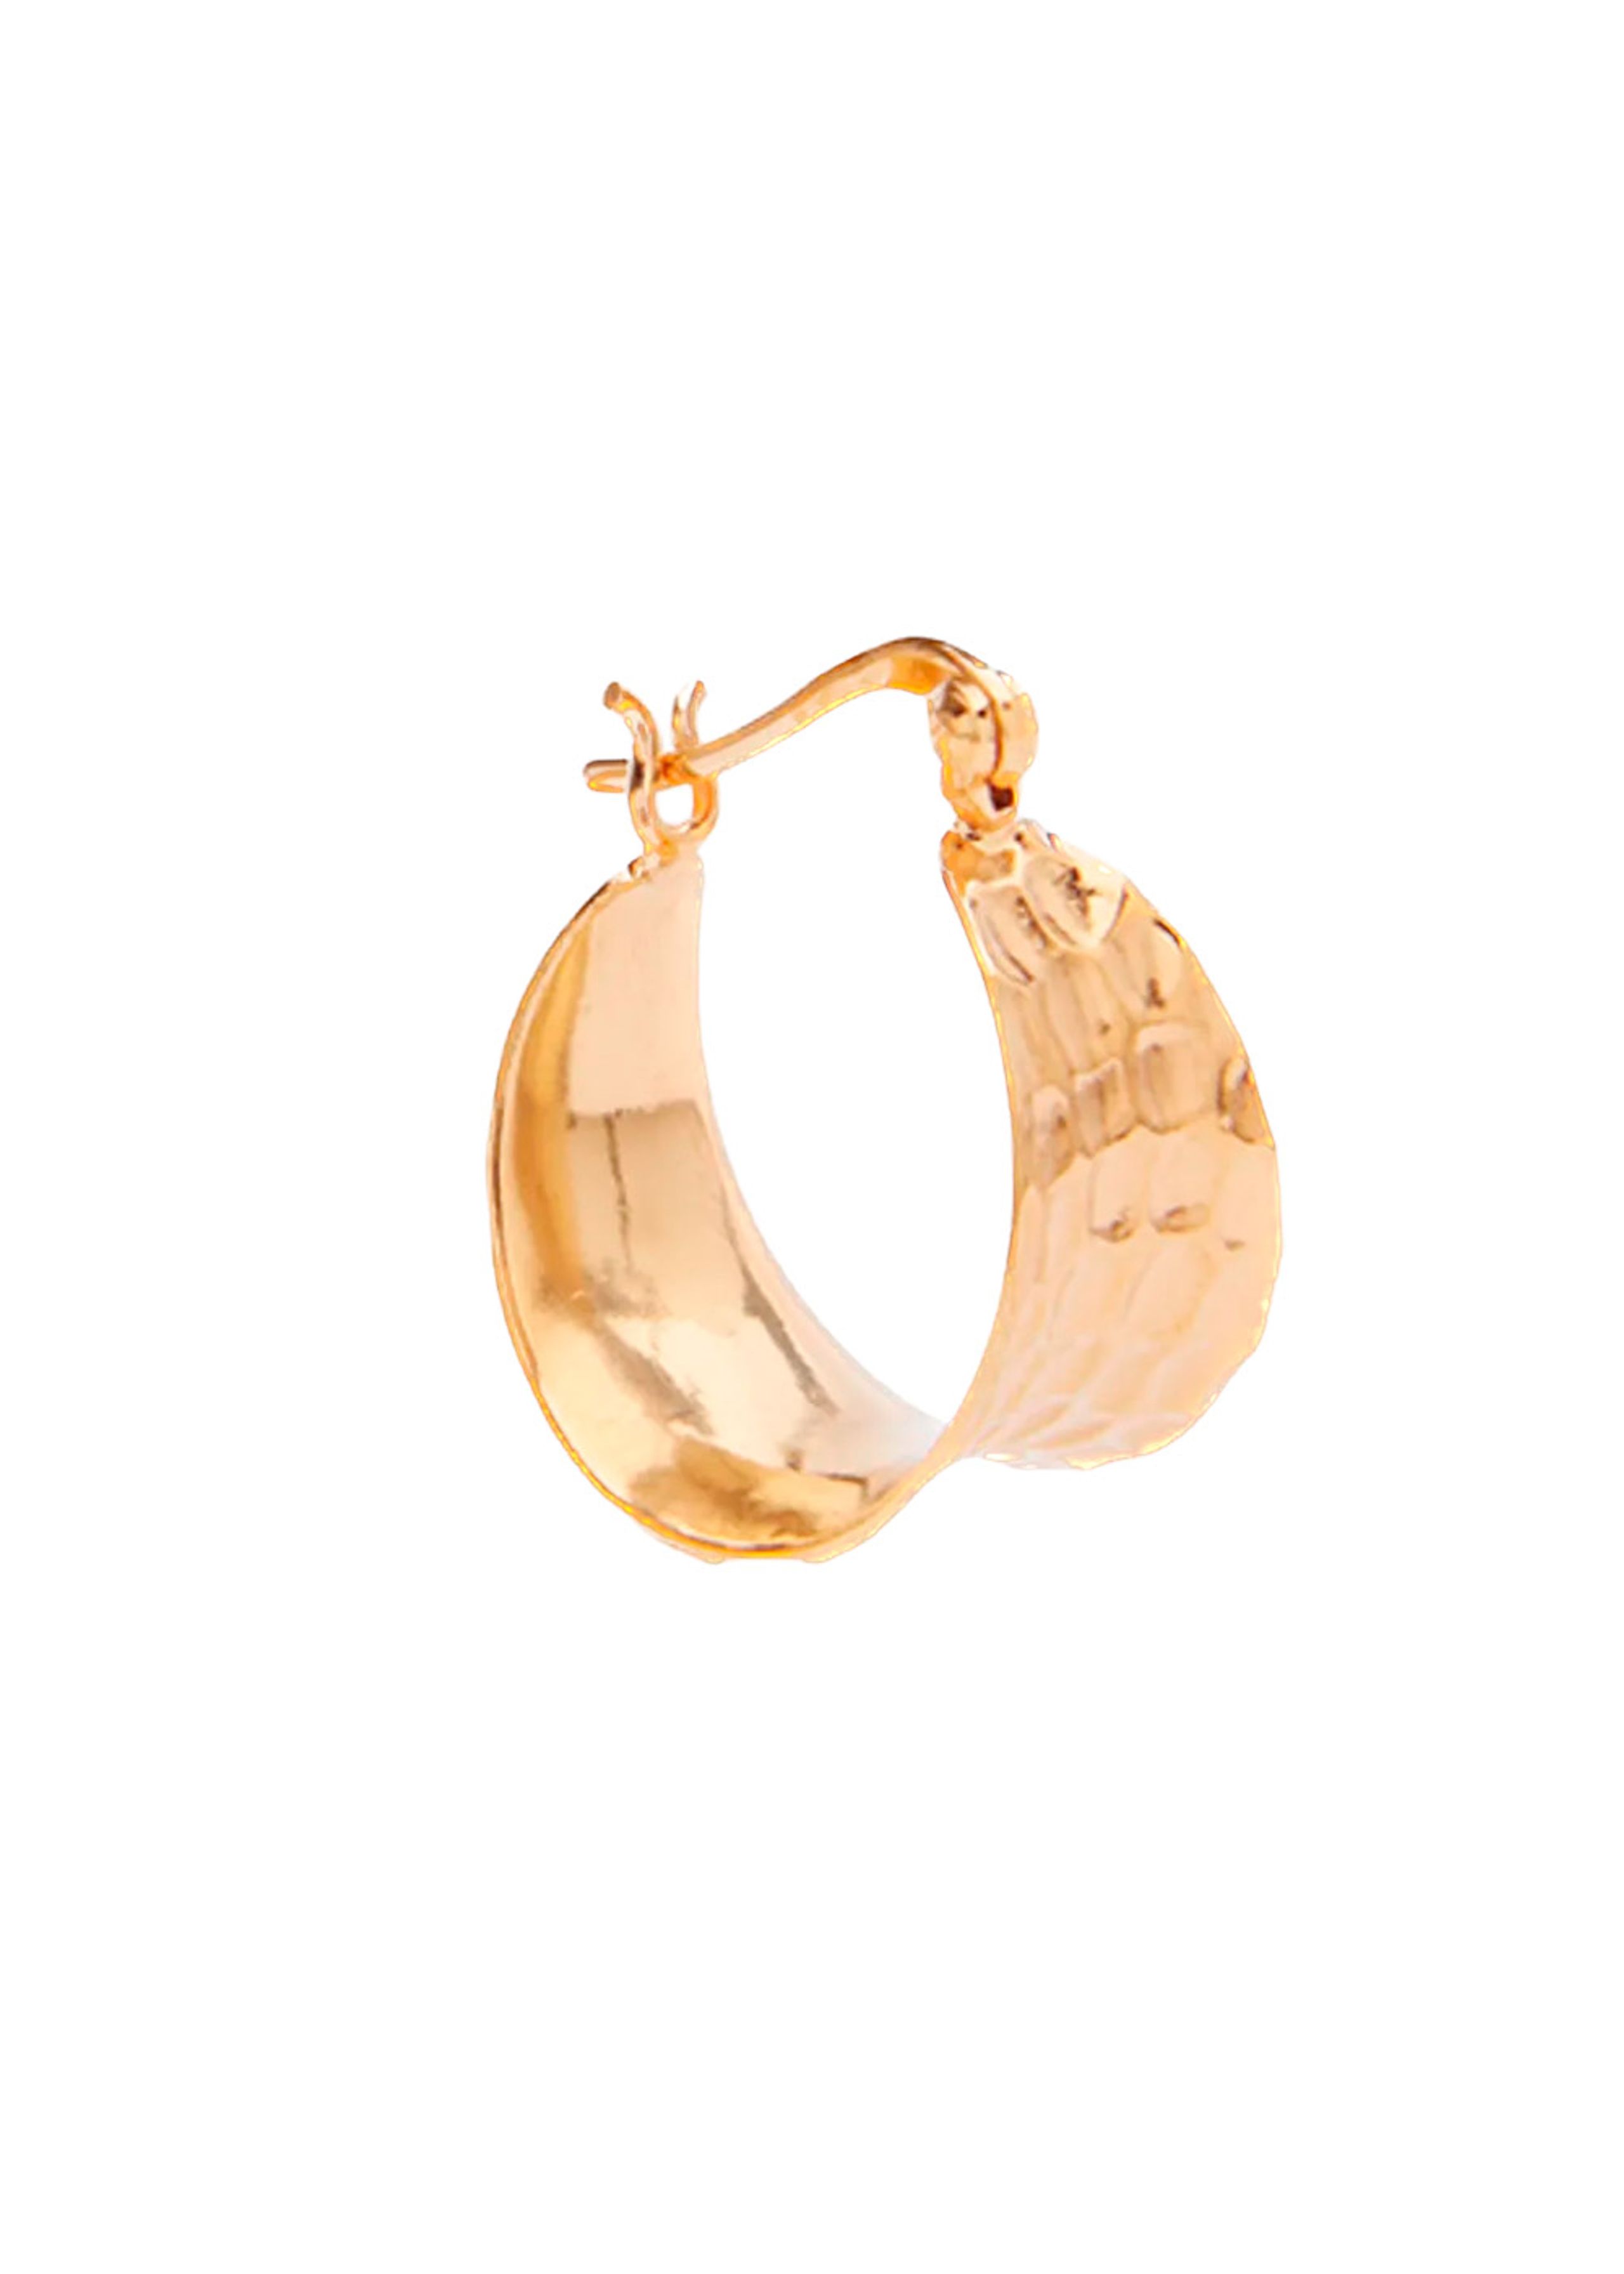 Silver Reflections 24K Gold Over Brass Hoop Earrings - JCPenney